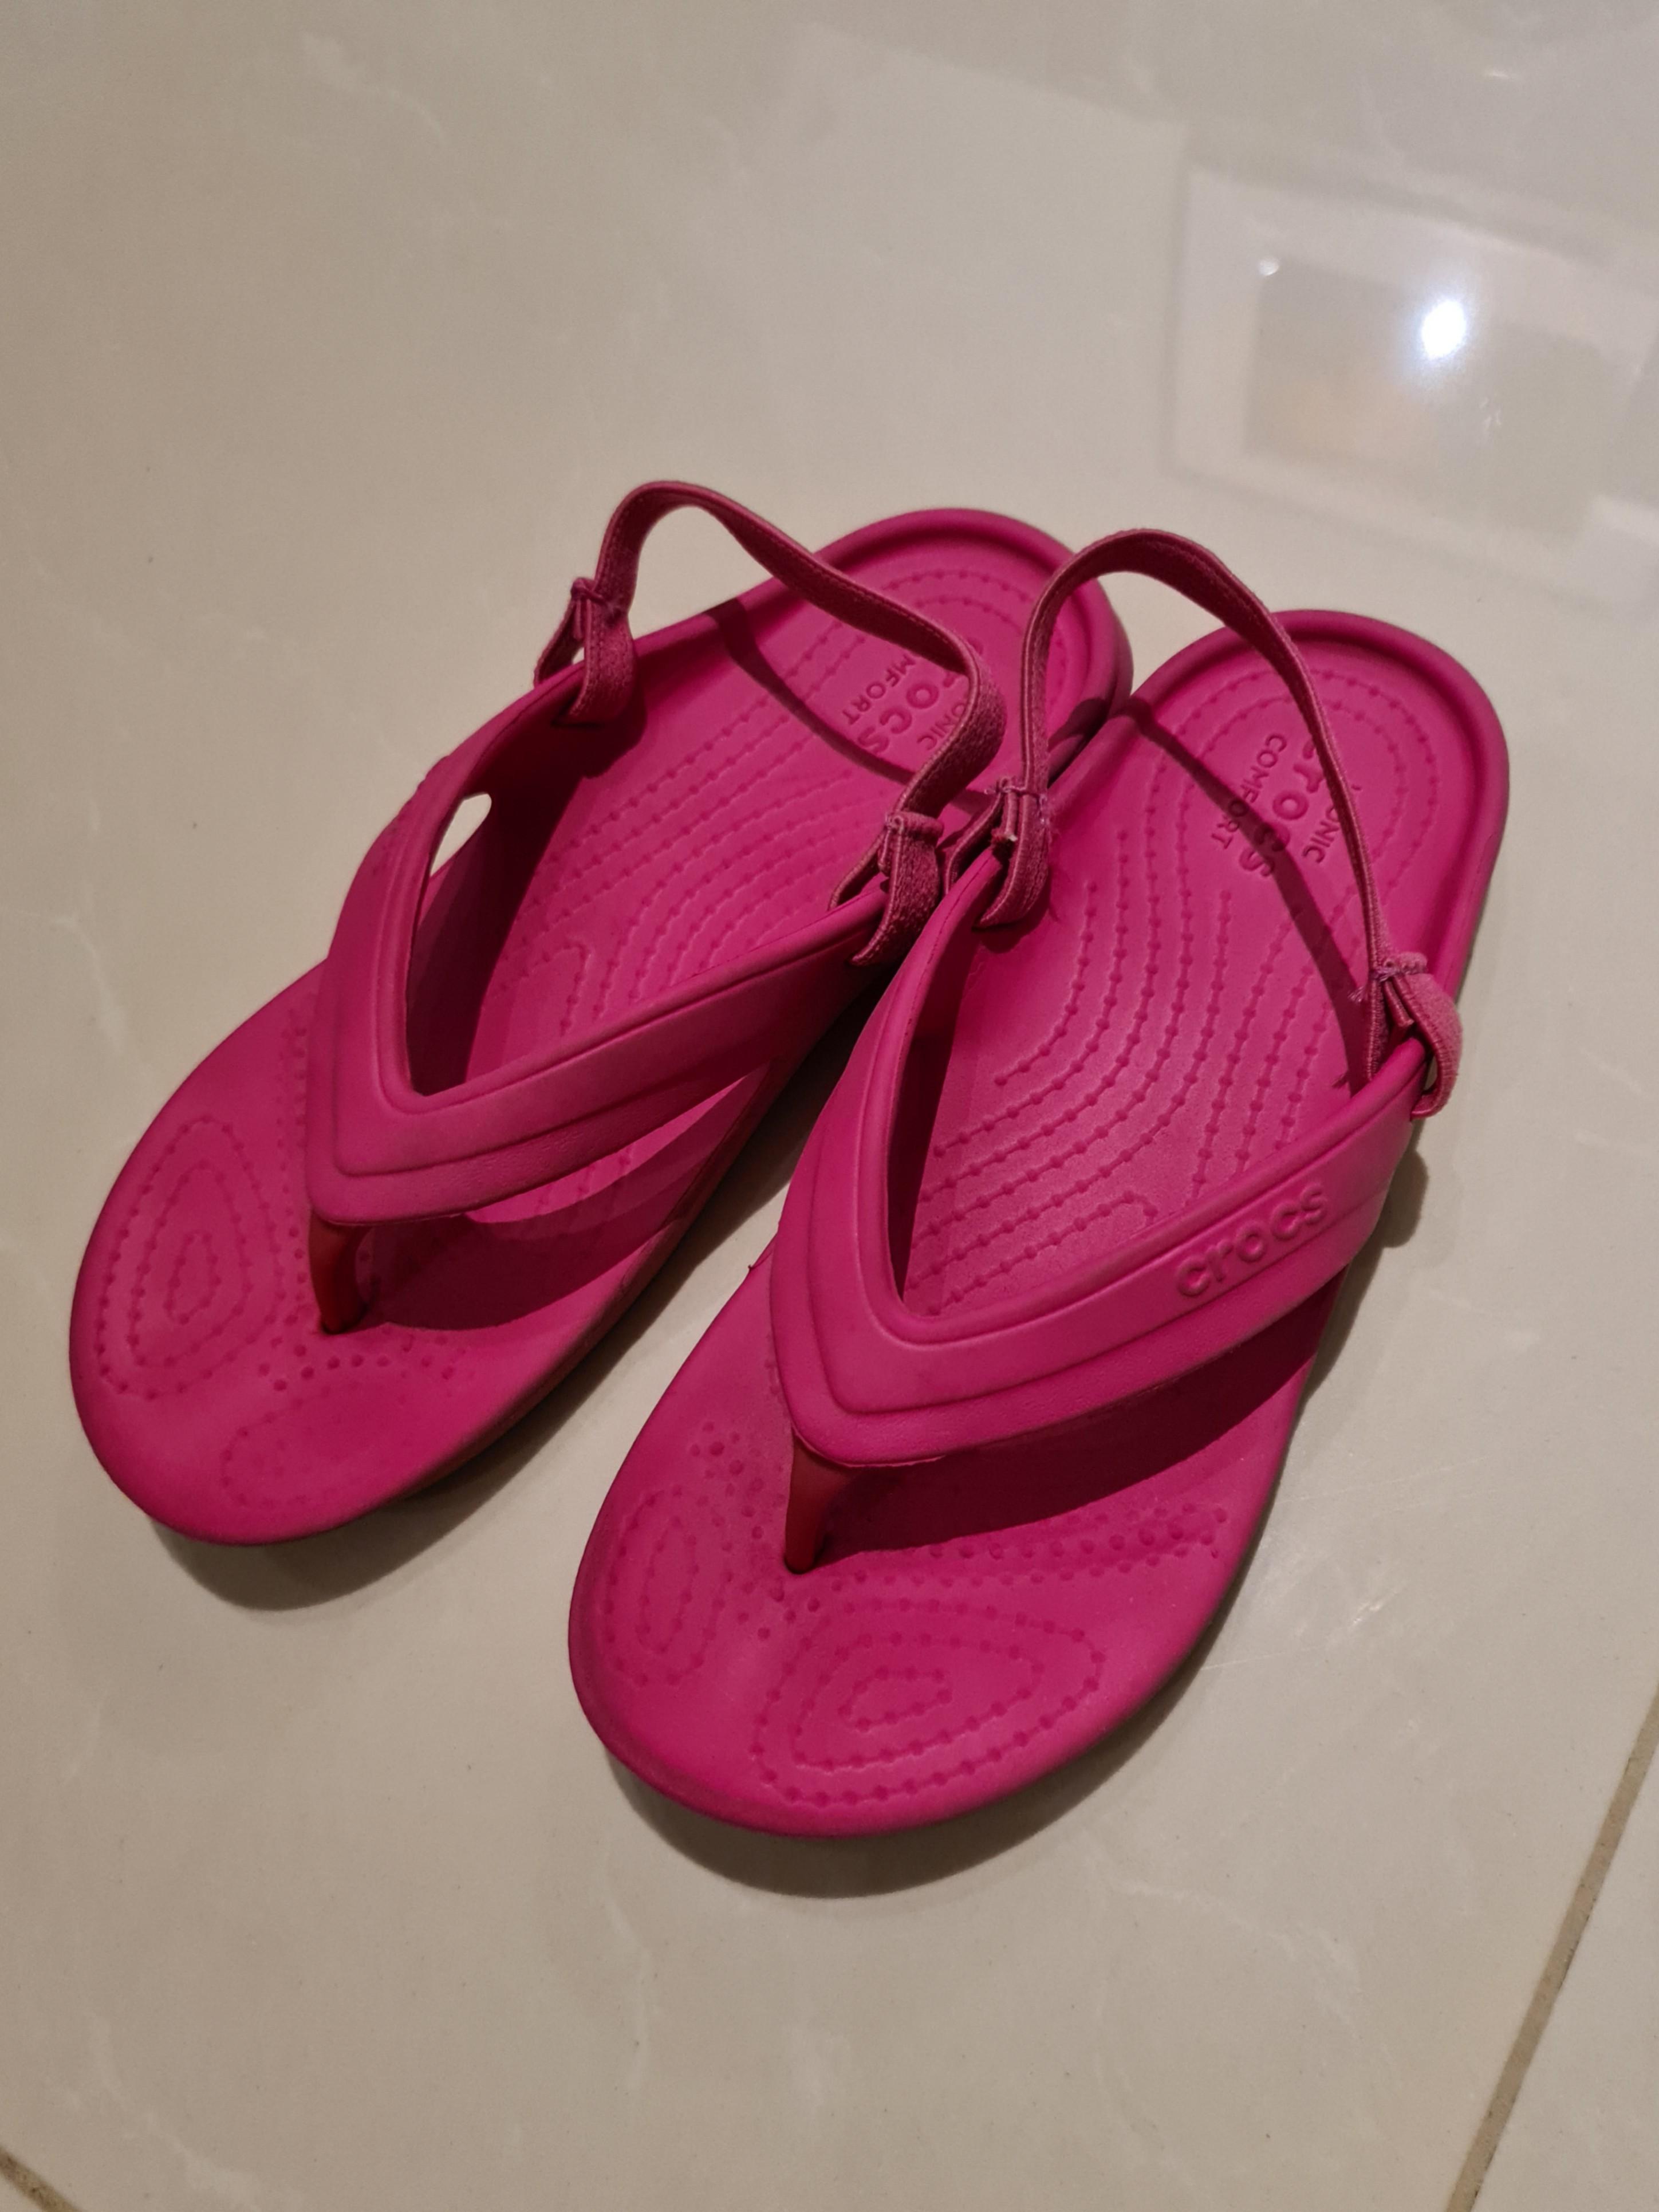 crocs slippers pink